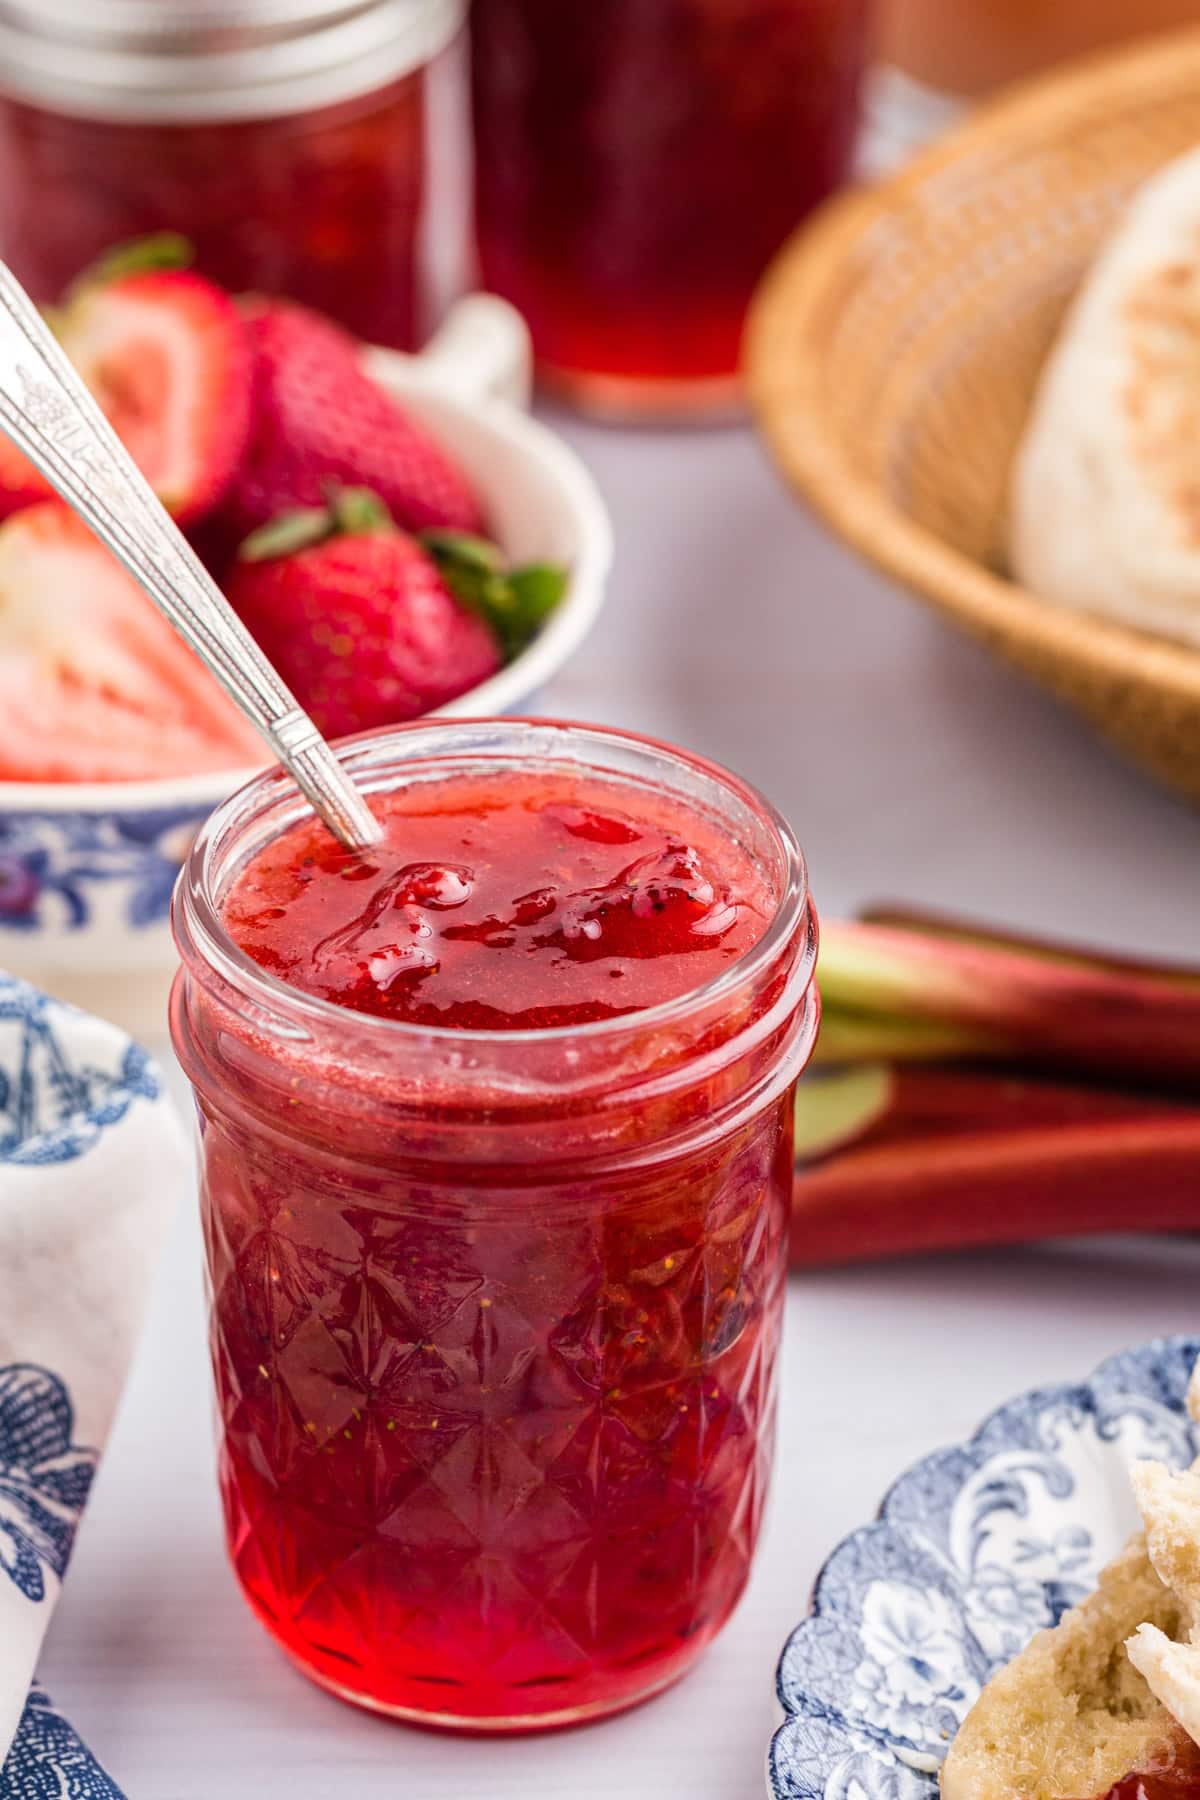 Strawberry rhubarb jam jar with a spoon in it.